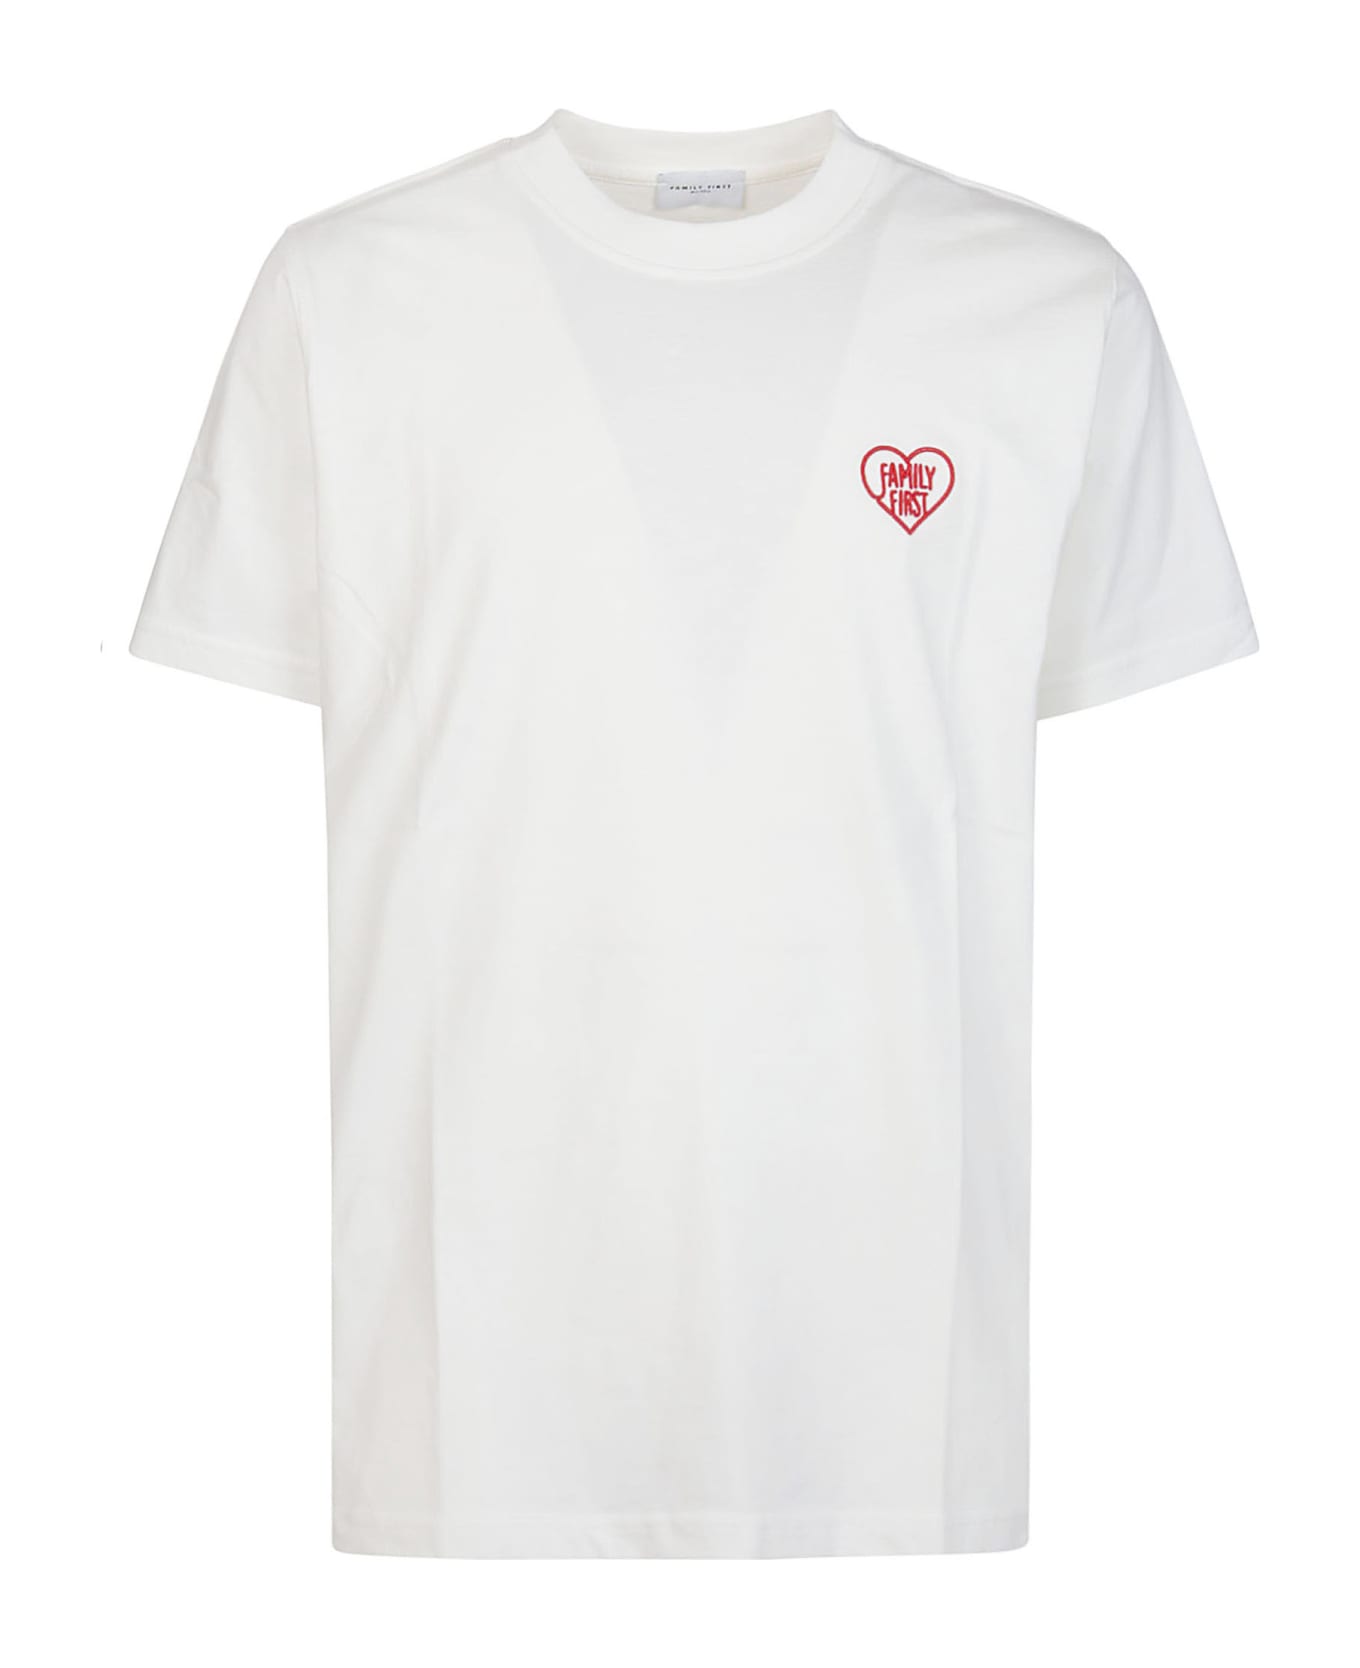 Family First Milano Heart T-shirt - White